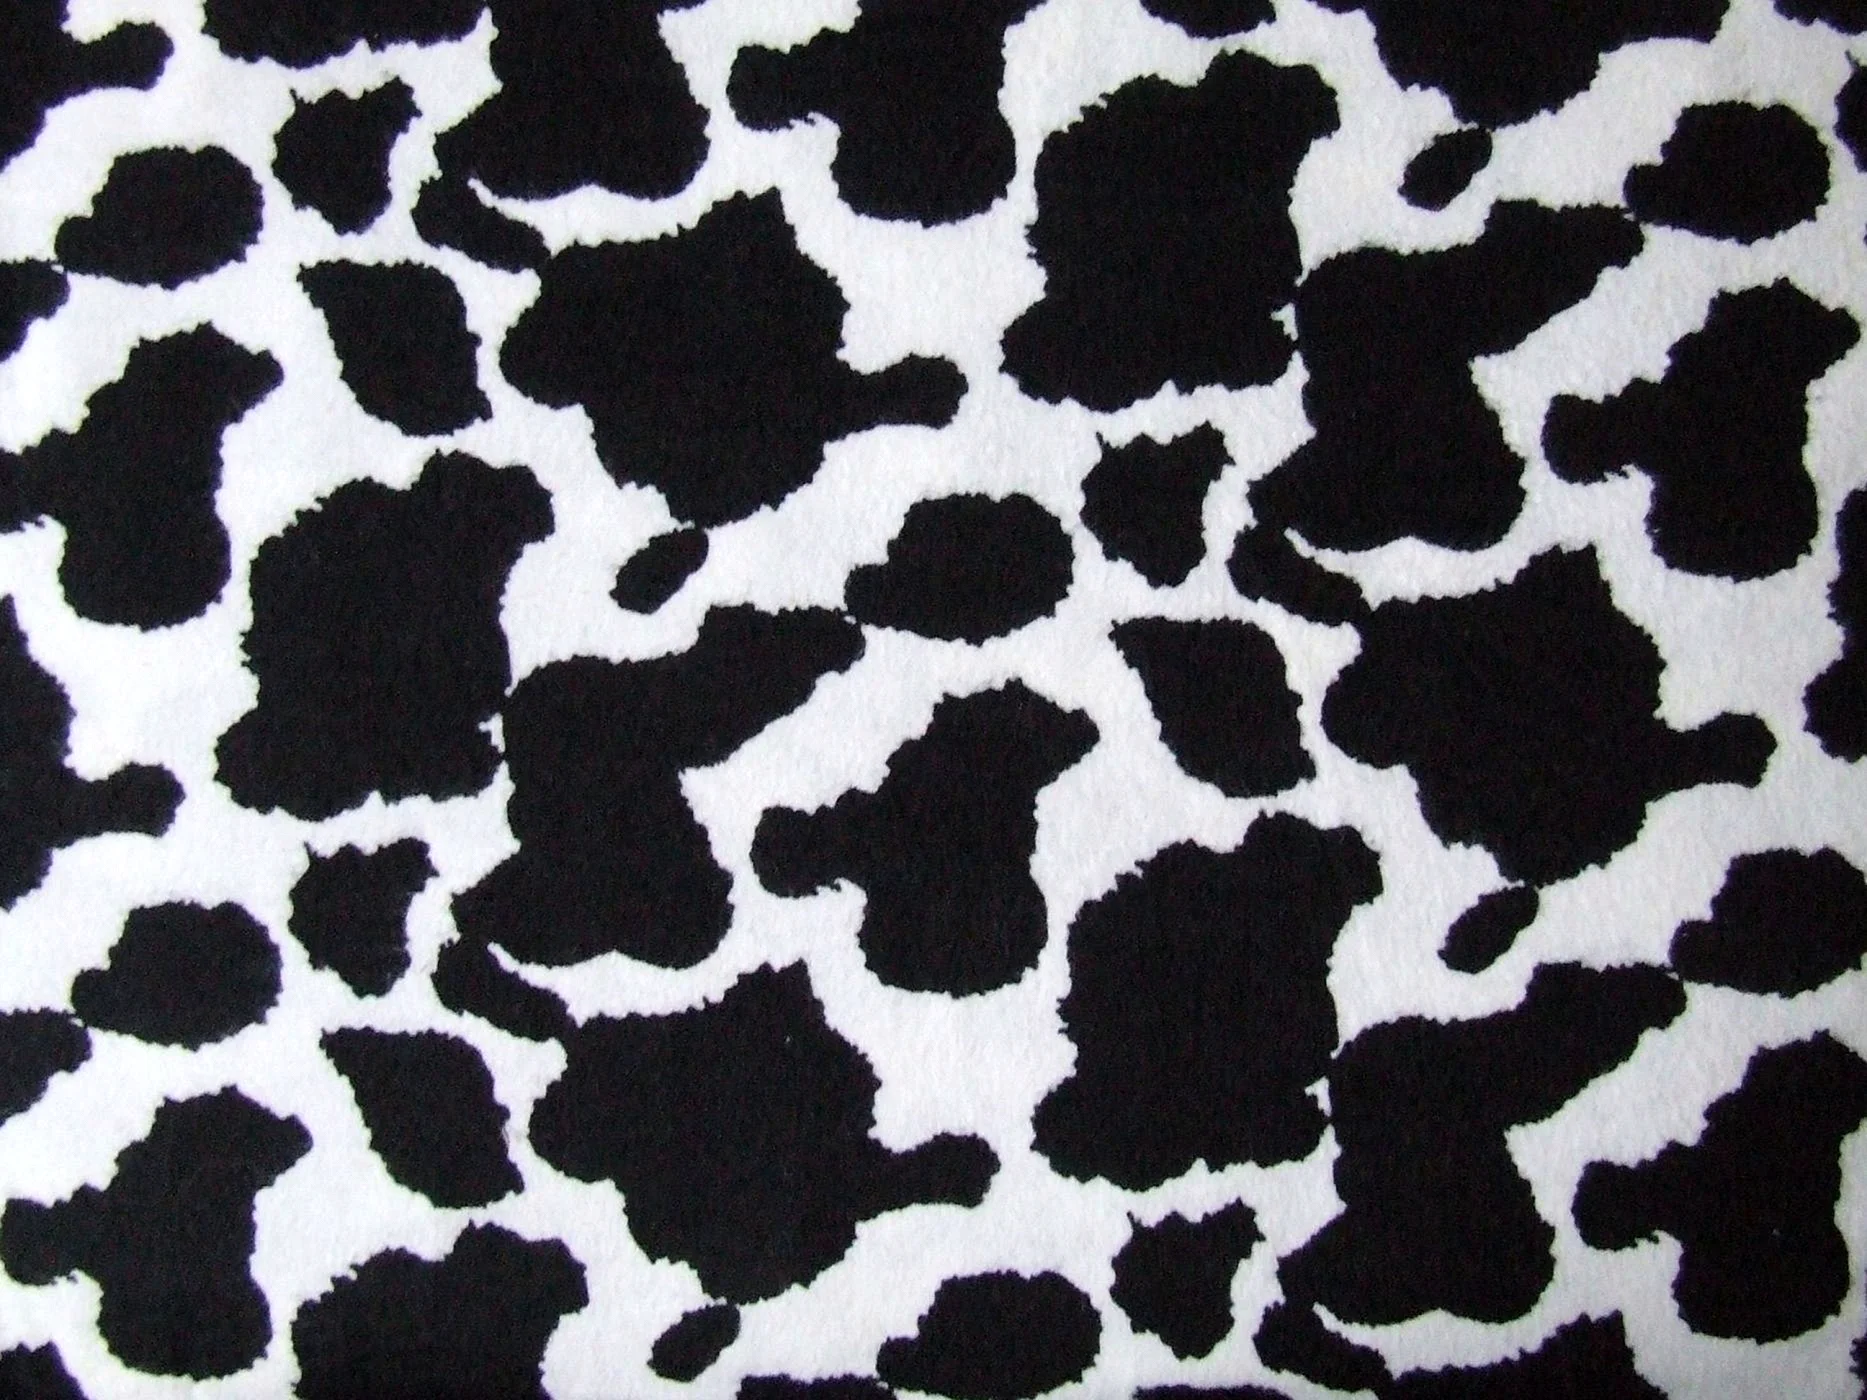 Cow Print Texture Wallpaper